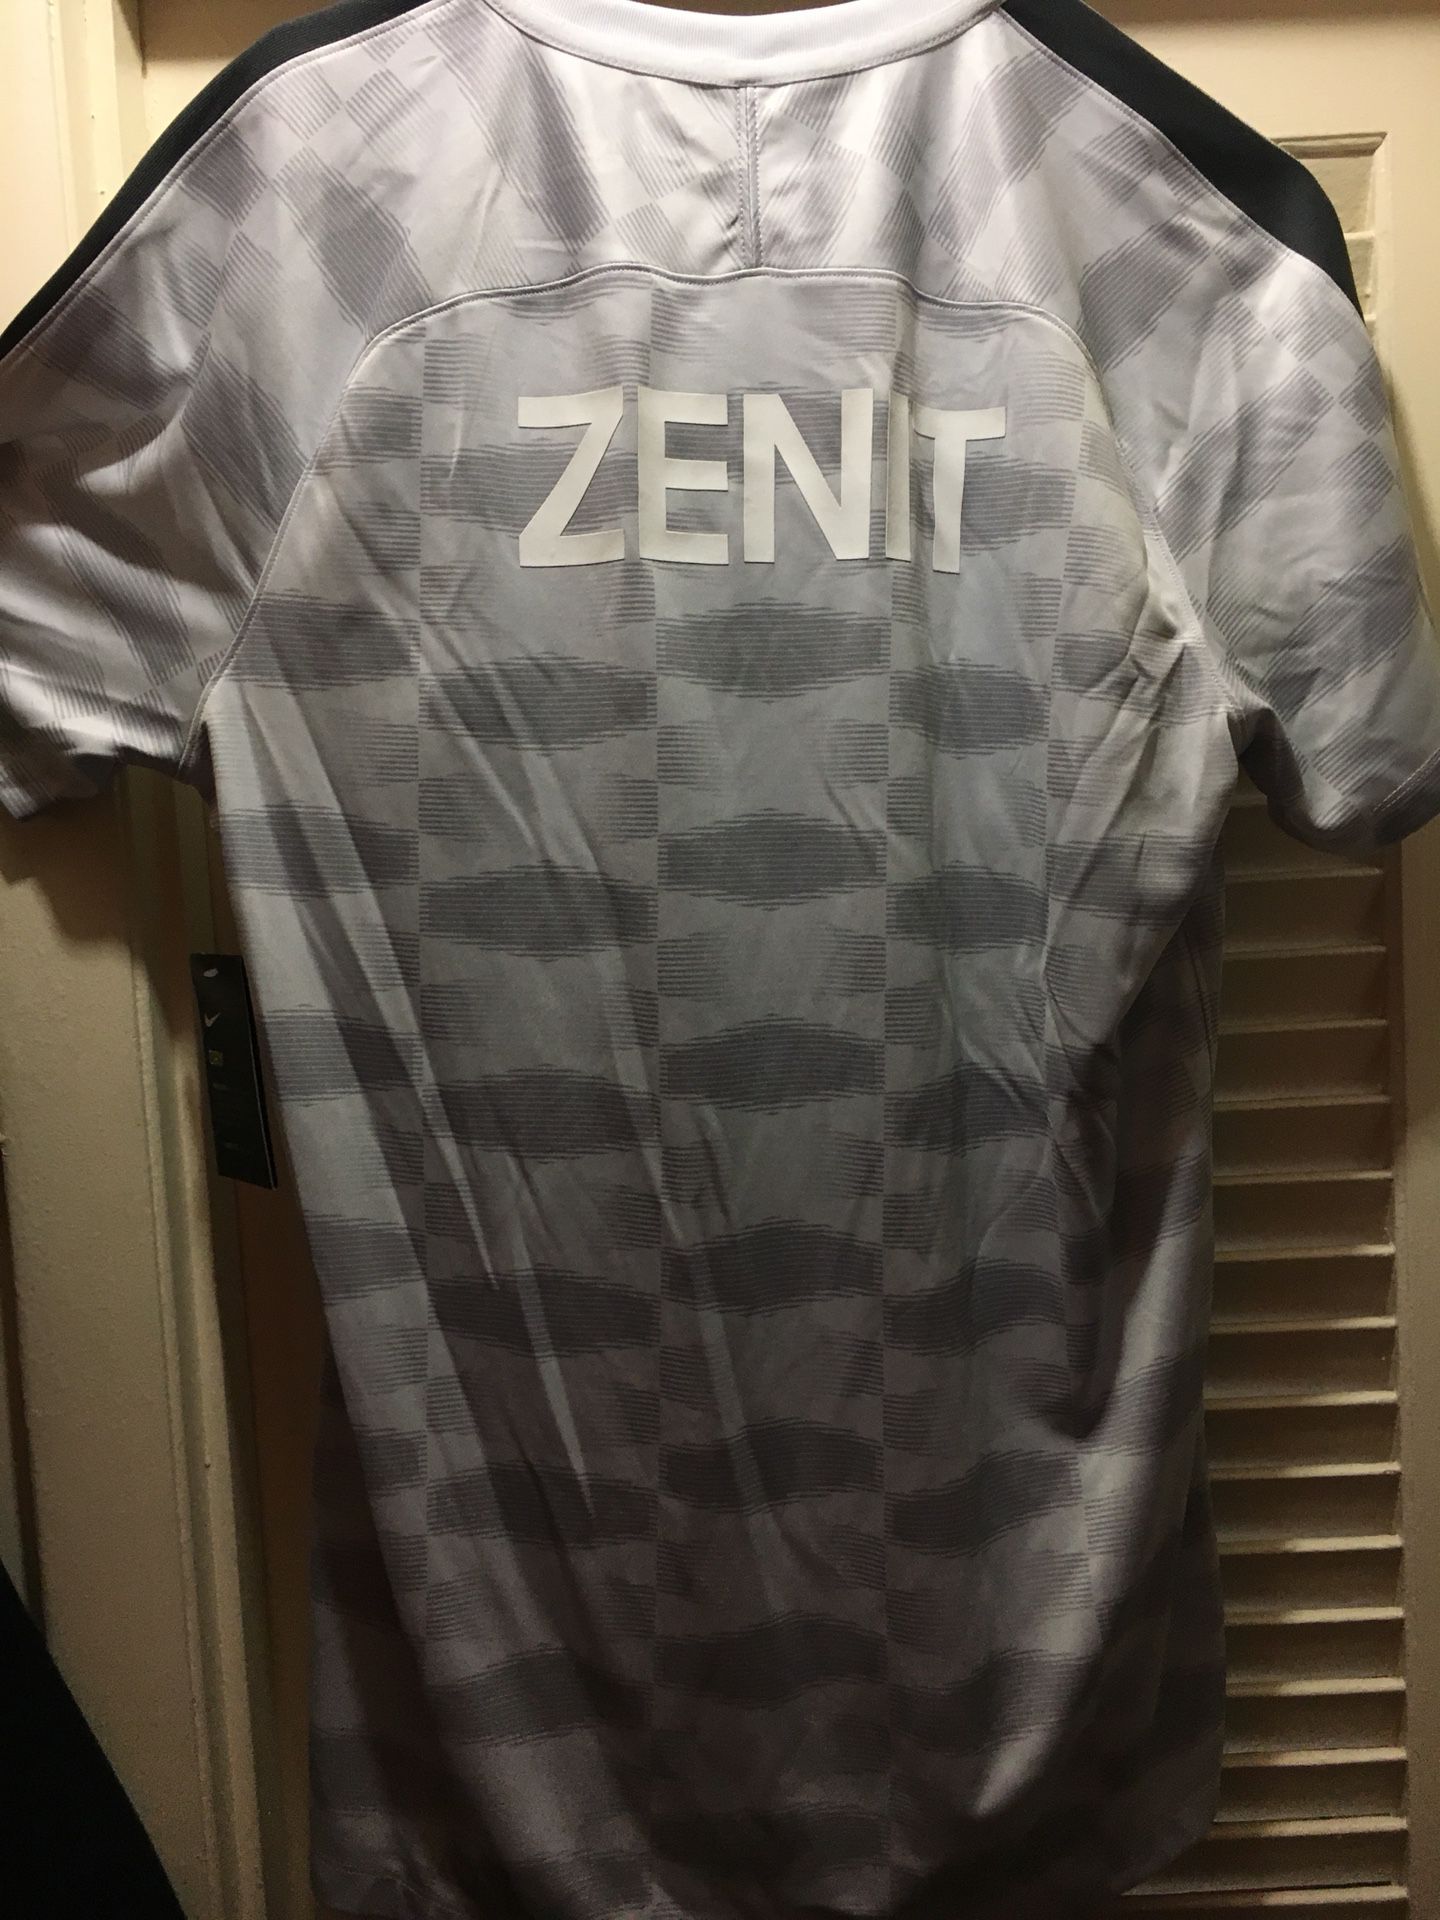 Brand new Nike soccer Zenit DS training jersey